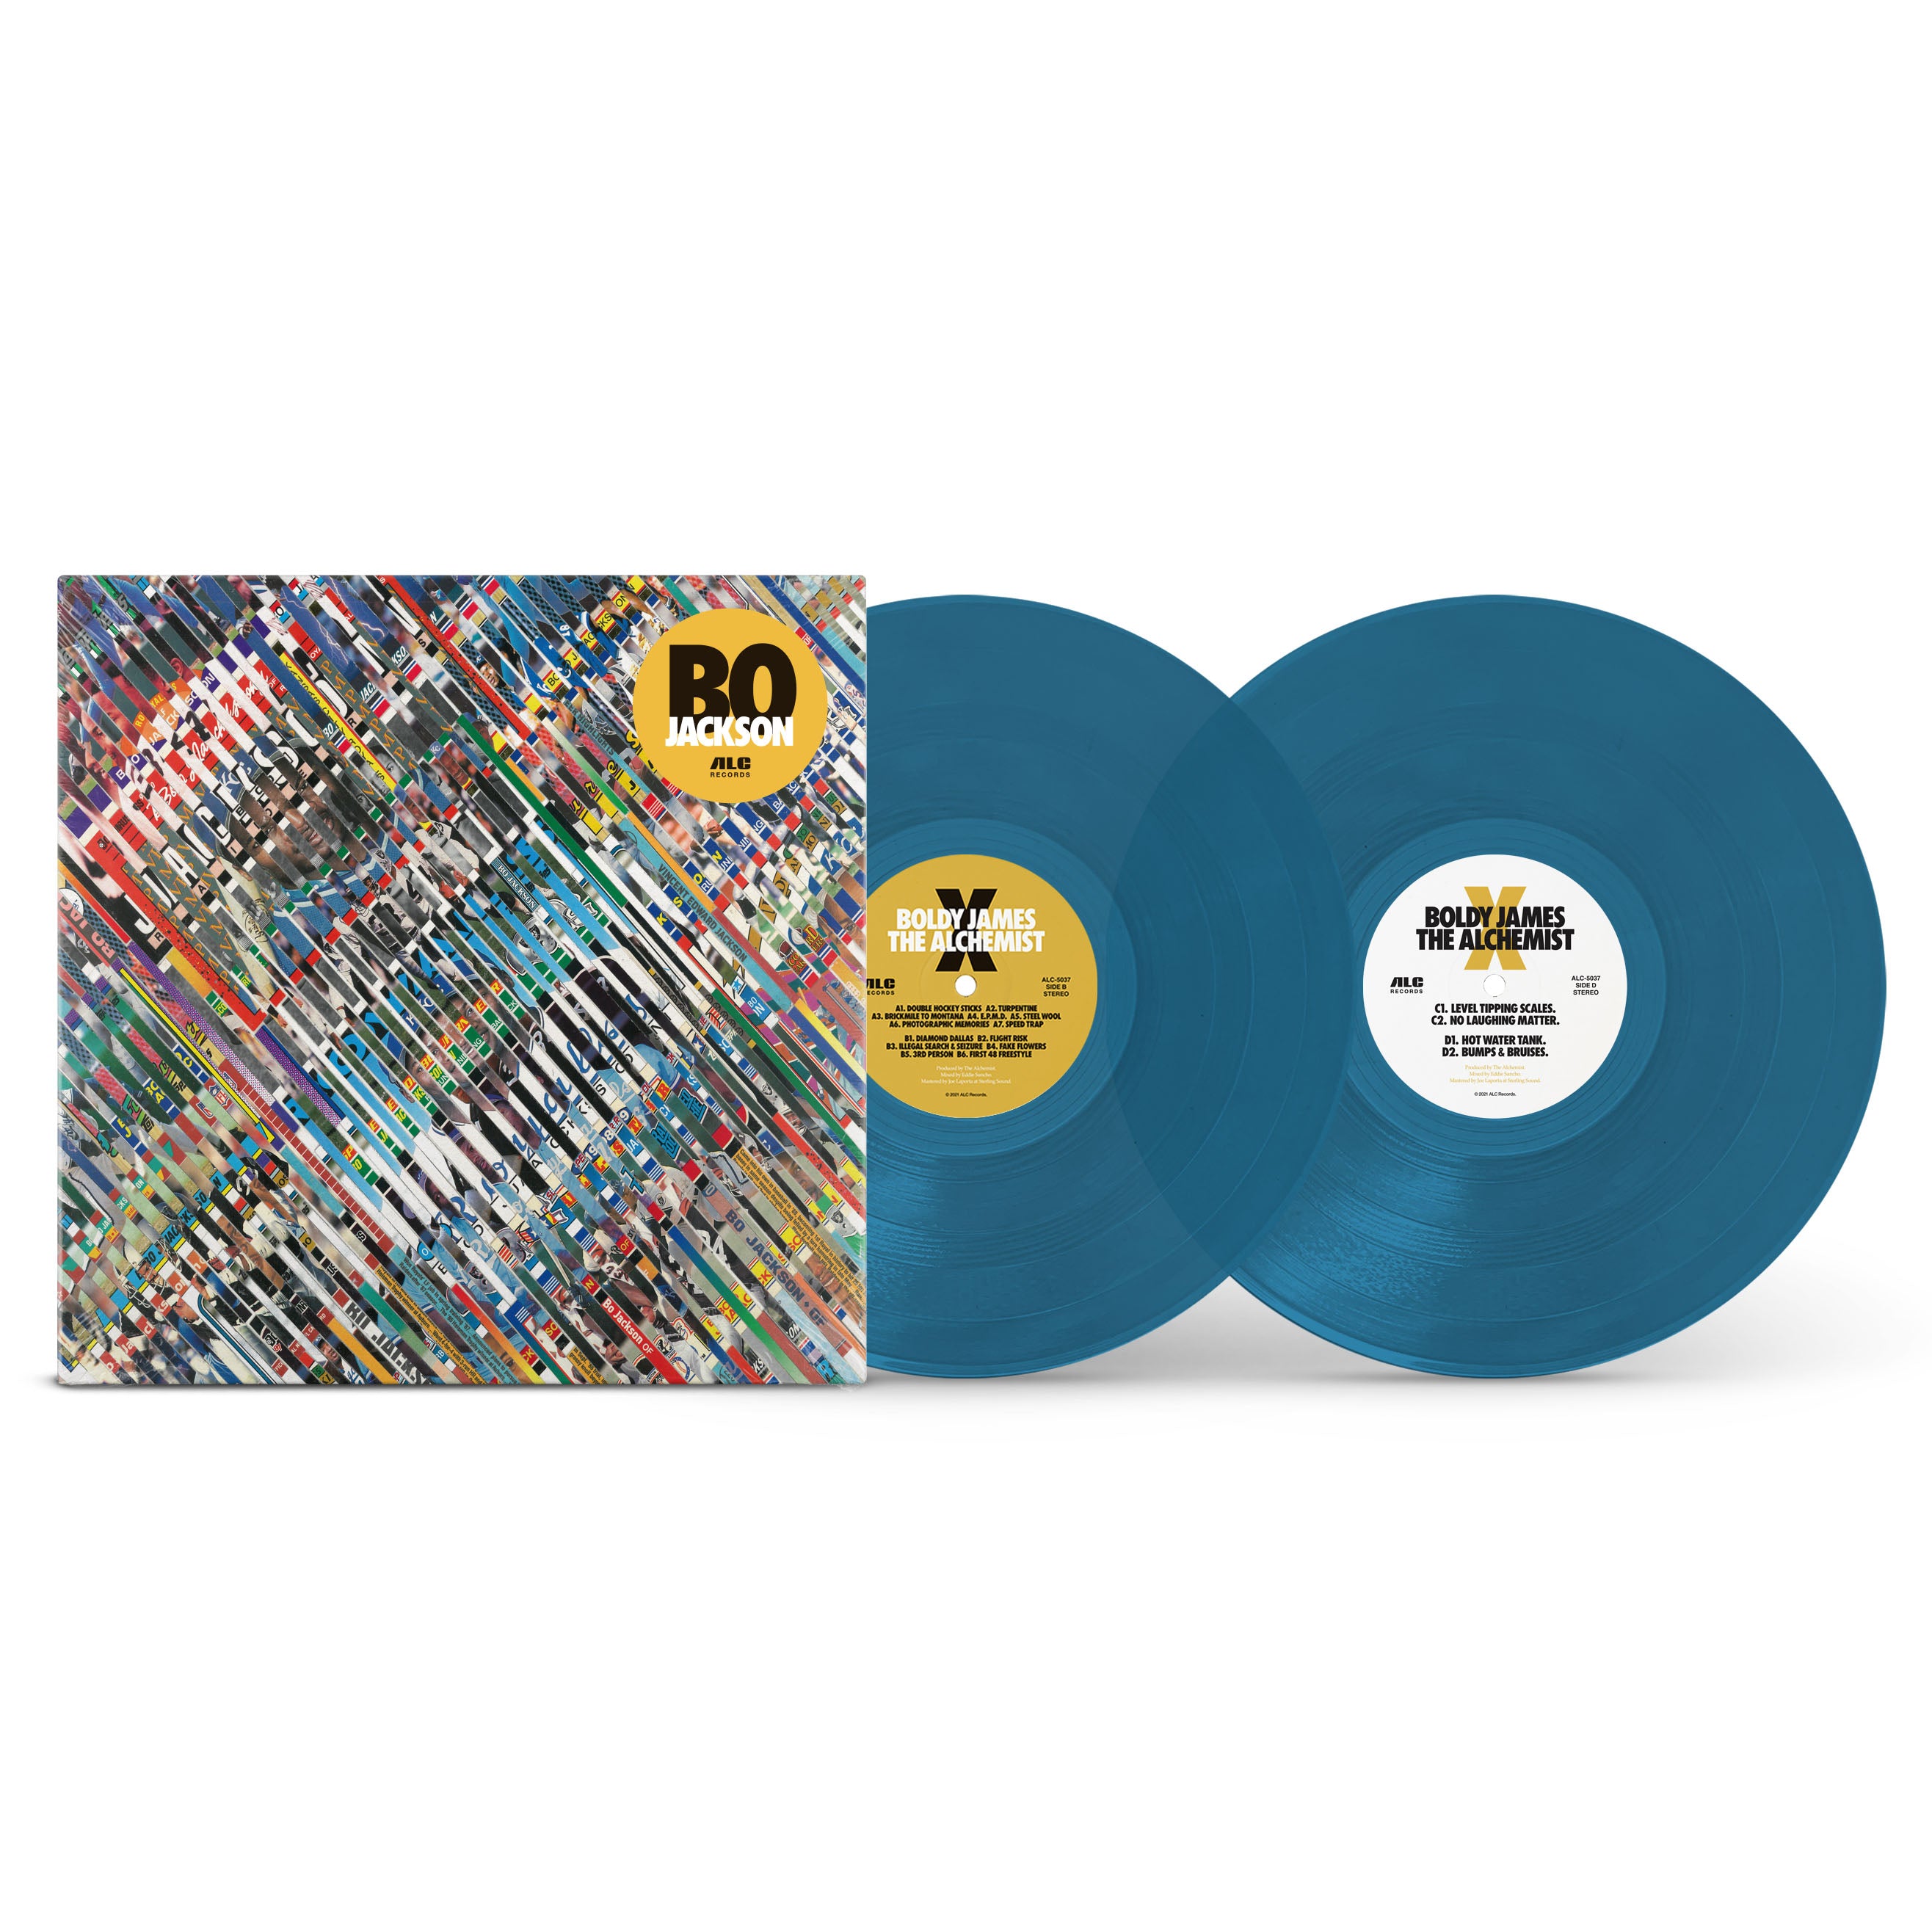 Bo Jackson: Expanded Edition (Blue Vinyl 2xLP)